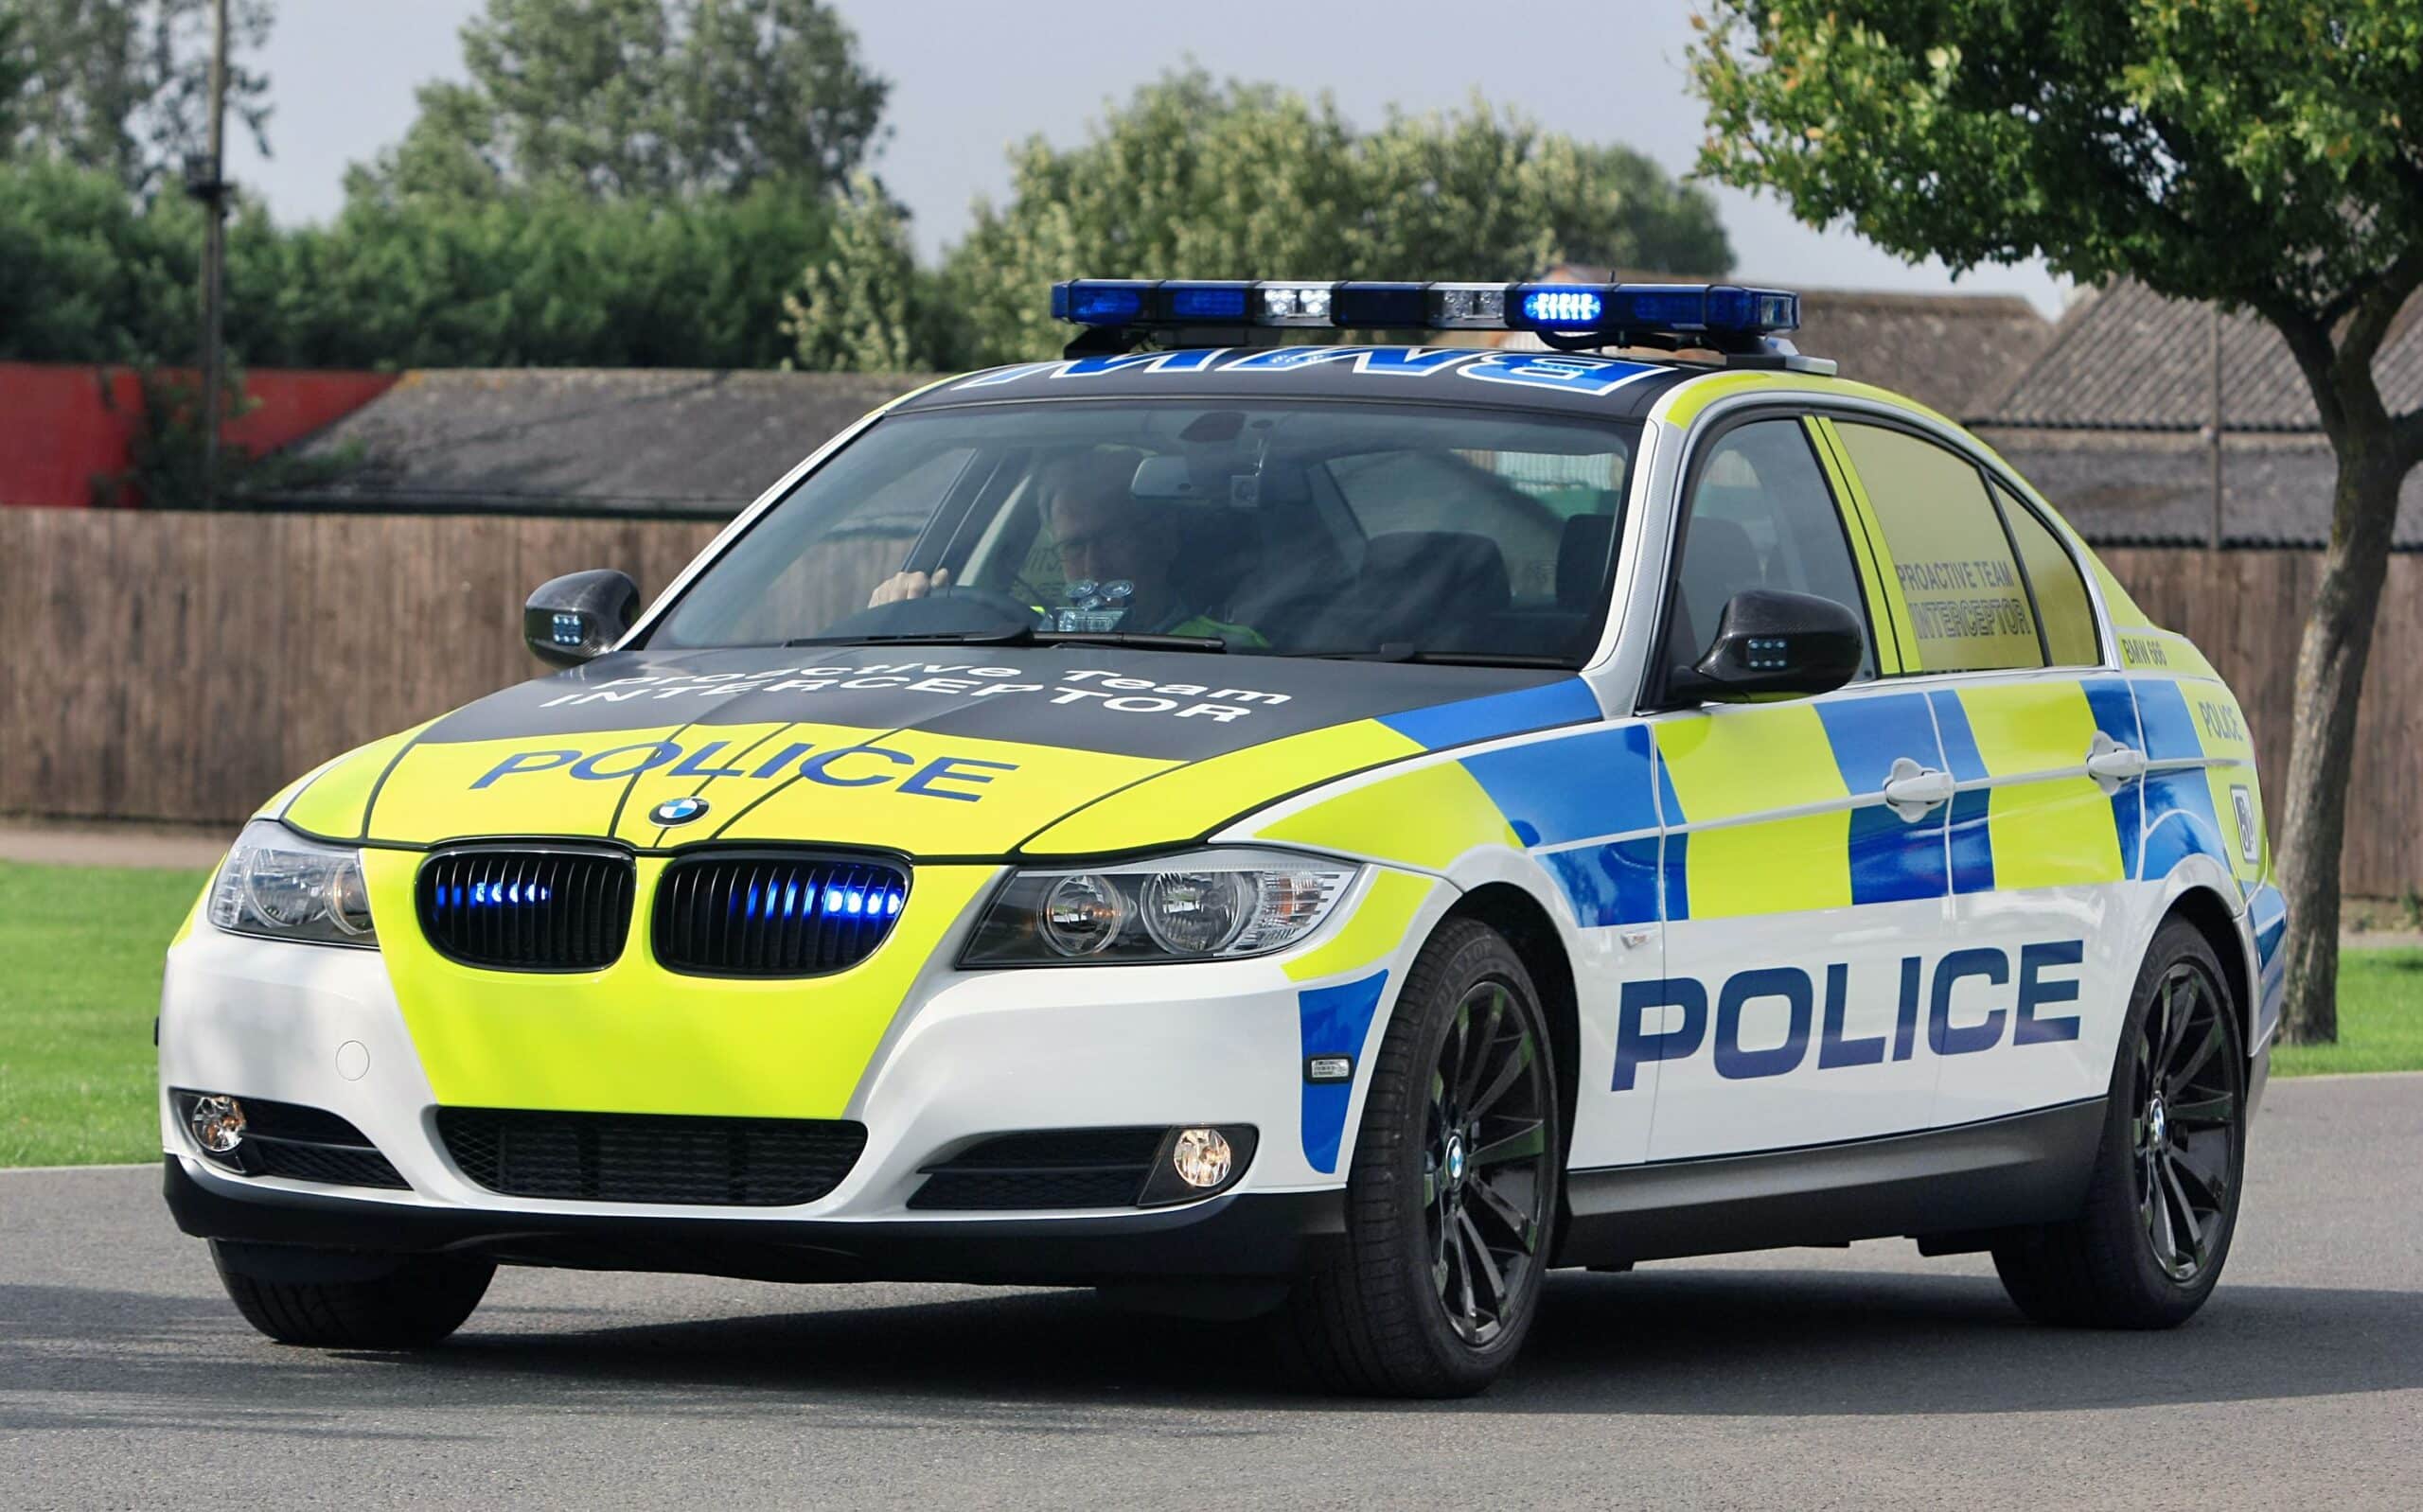 UK Police Vehicle